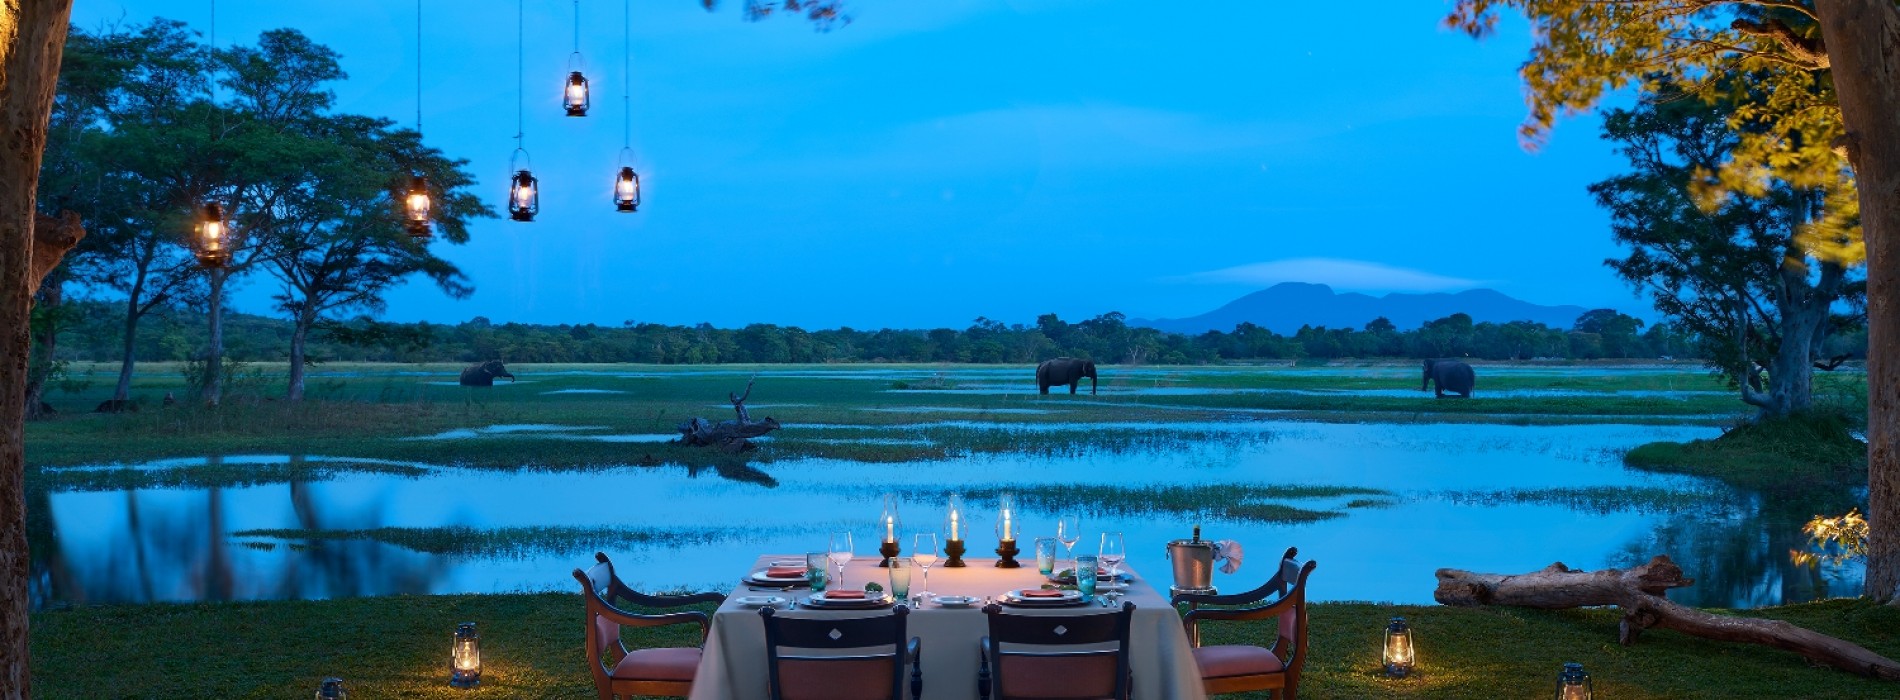 Cinnamon Hotels & Resorts launches a luxury wedding service for destination weddings in Sri Lanka